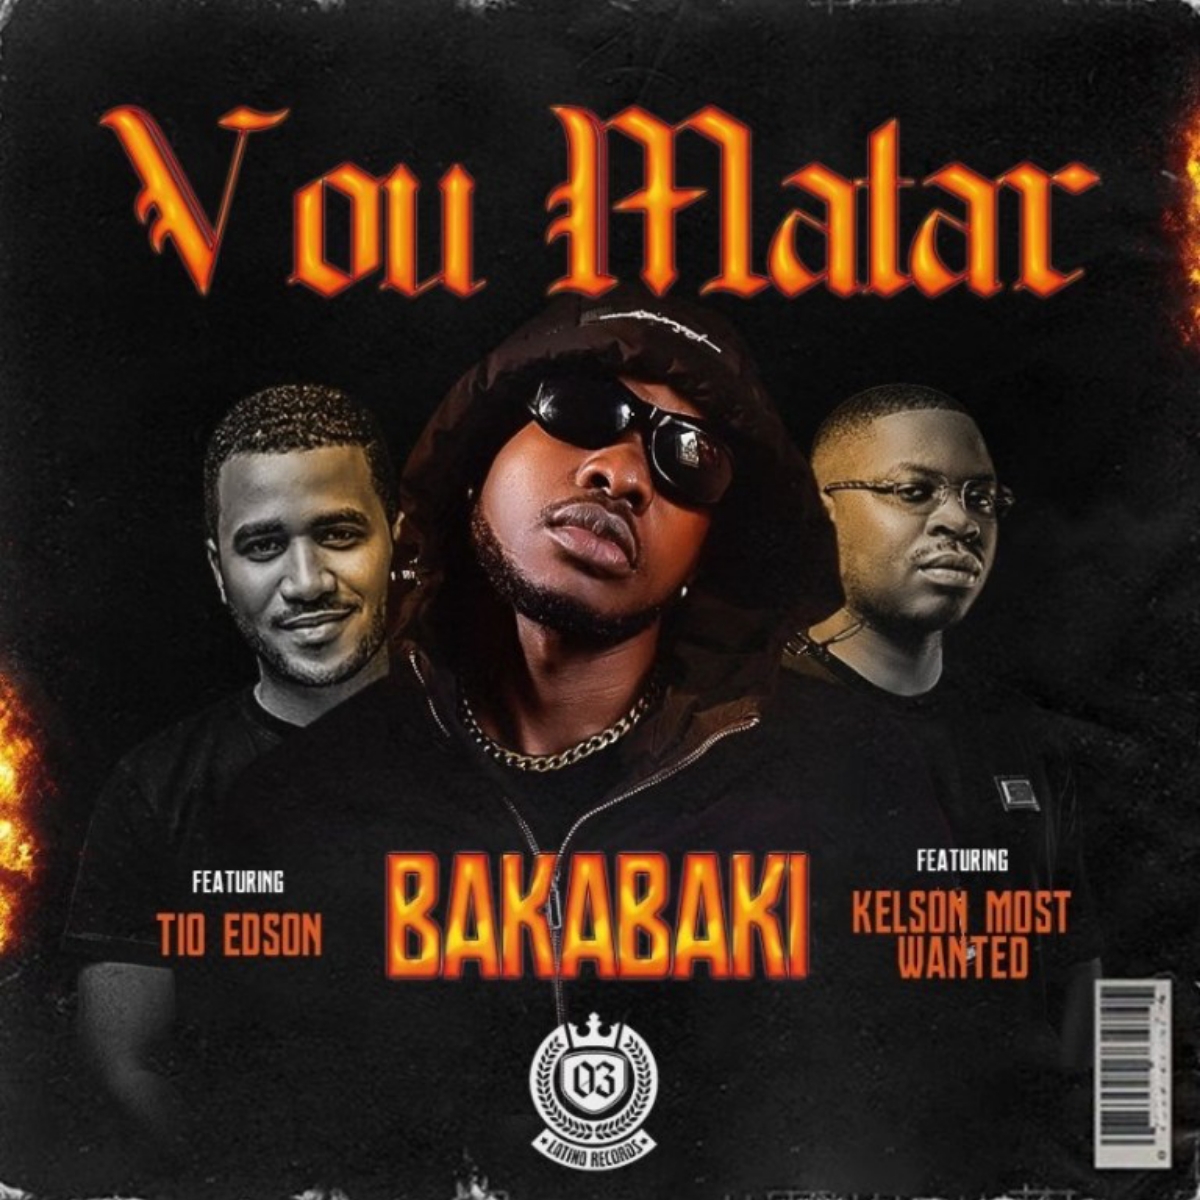 BakaBaki – Vou Matar (feat. Tio Edson & Kelson Most Wanted)